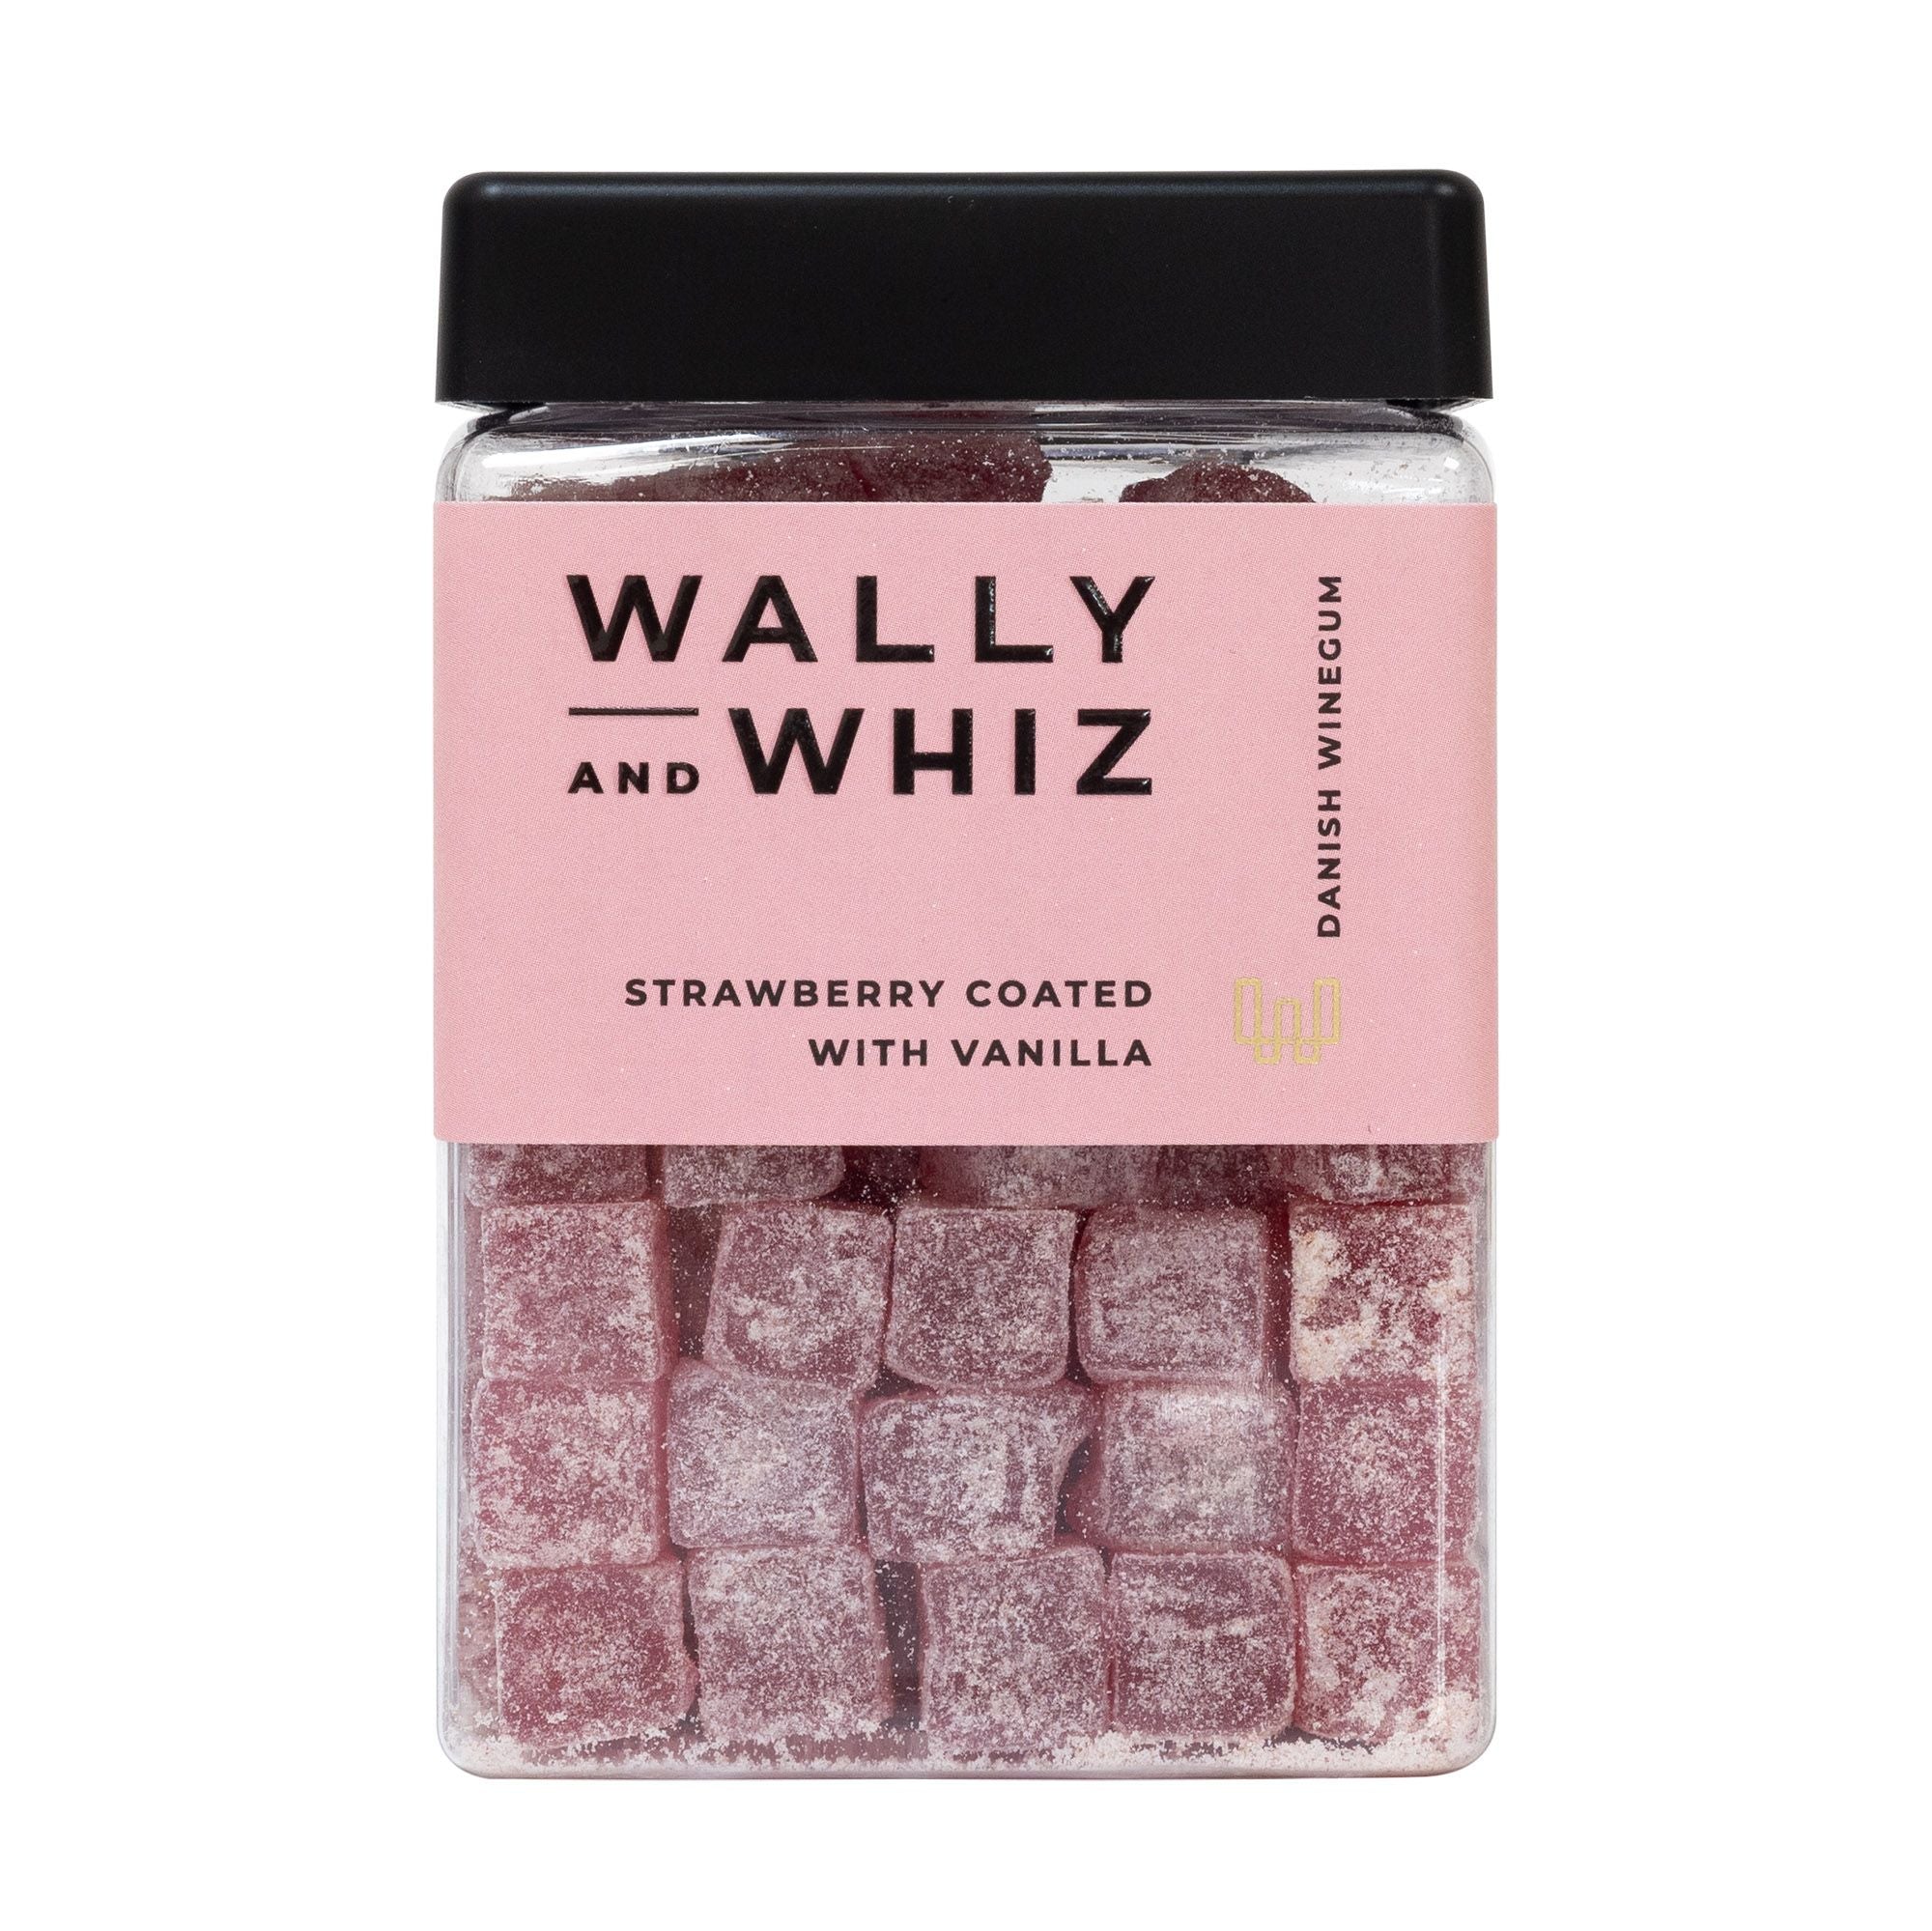 Wally And Whiz Sommarvinnummikub, jordgubbe med vanilj, 240 g